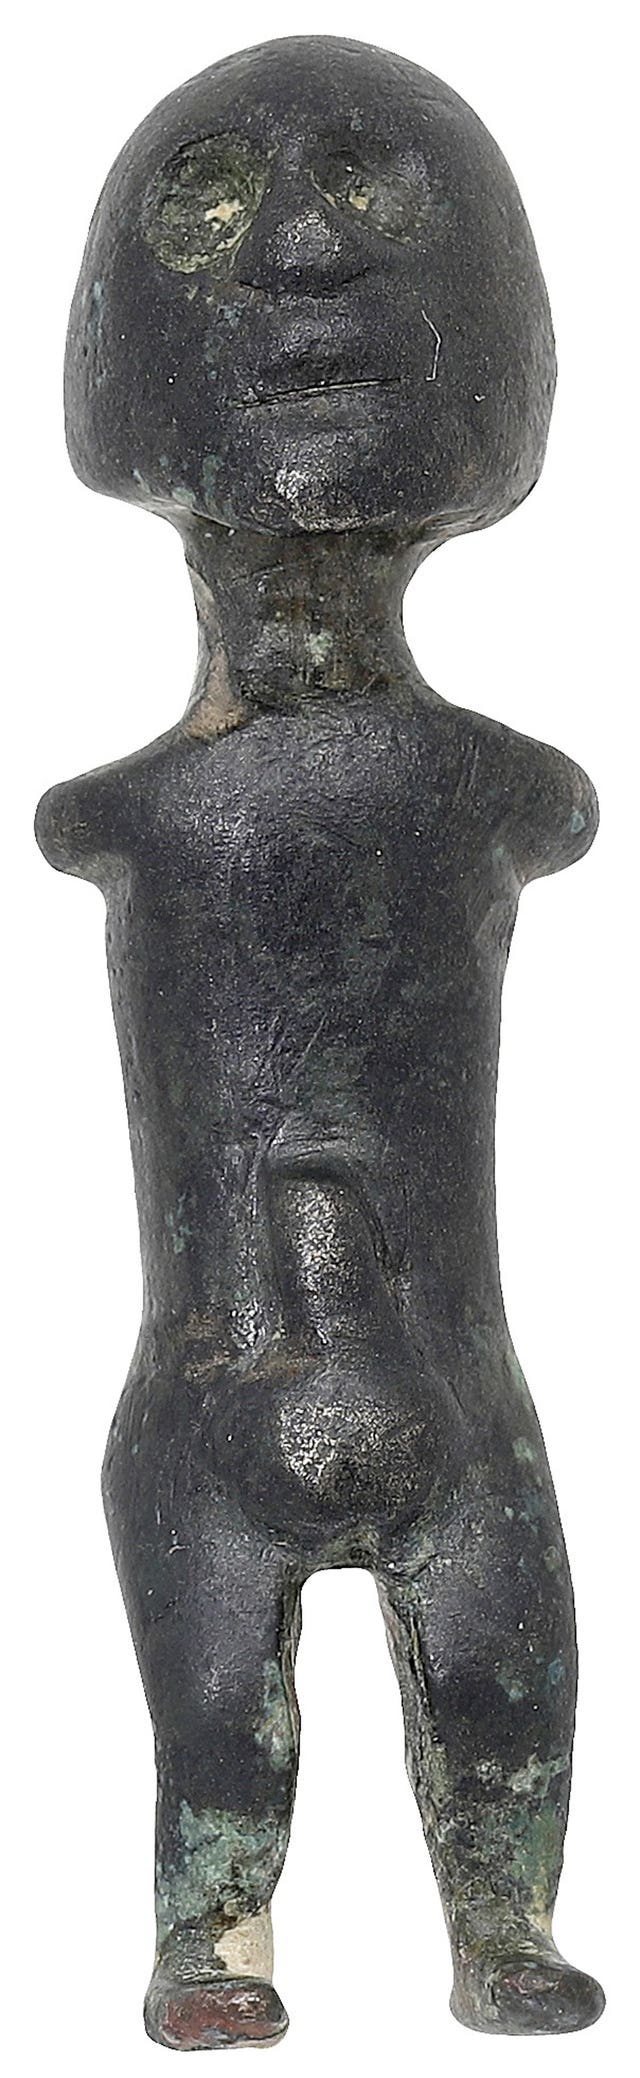 The bronze Celtic fertility figure 